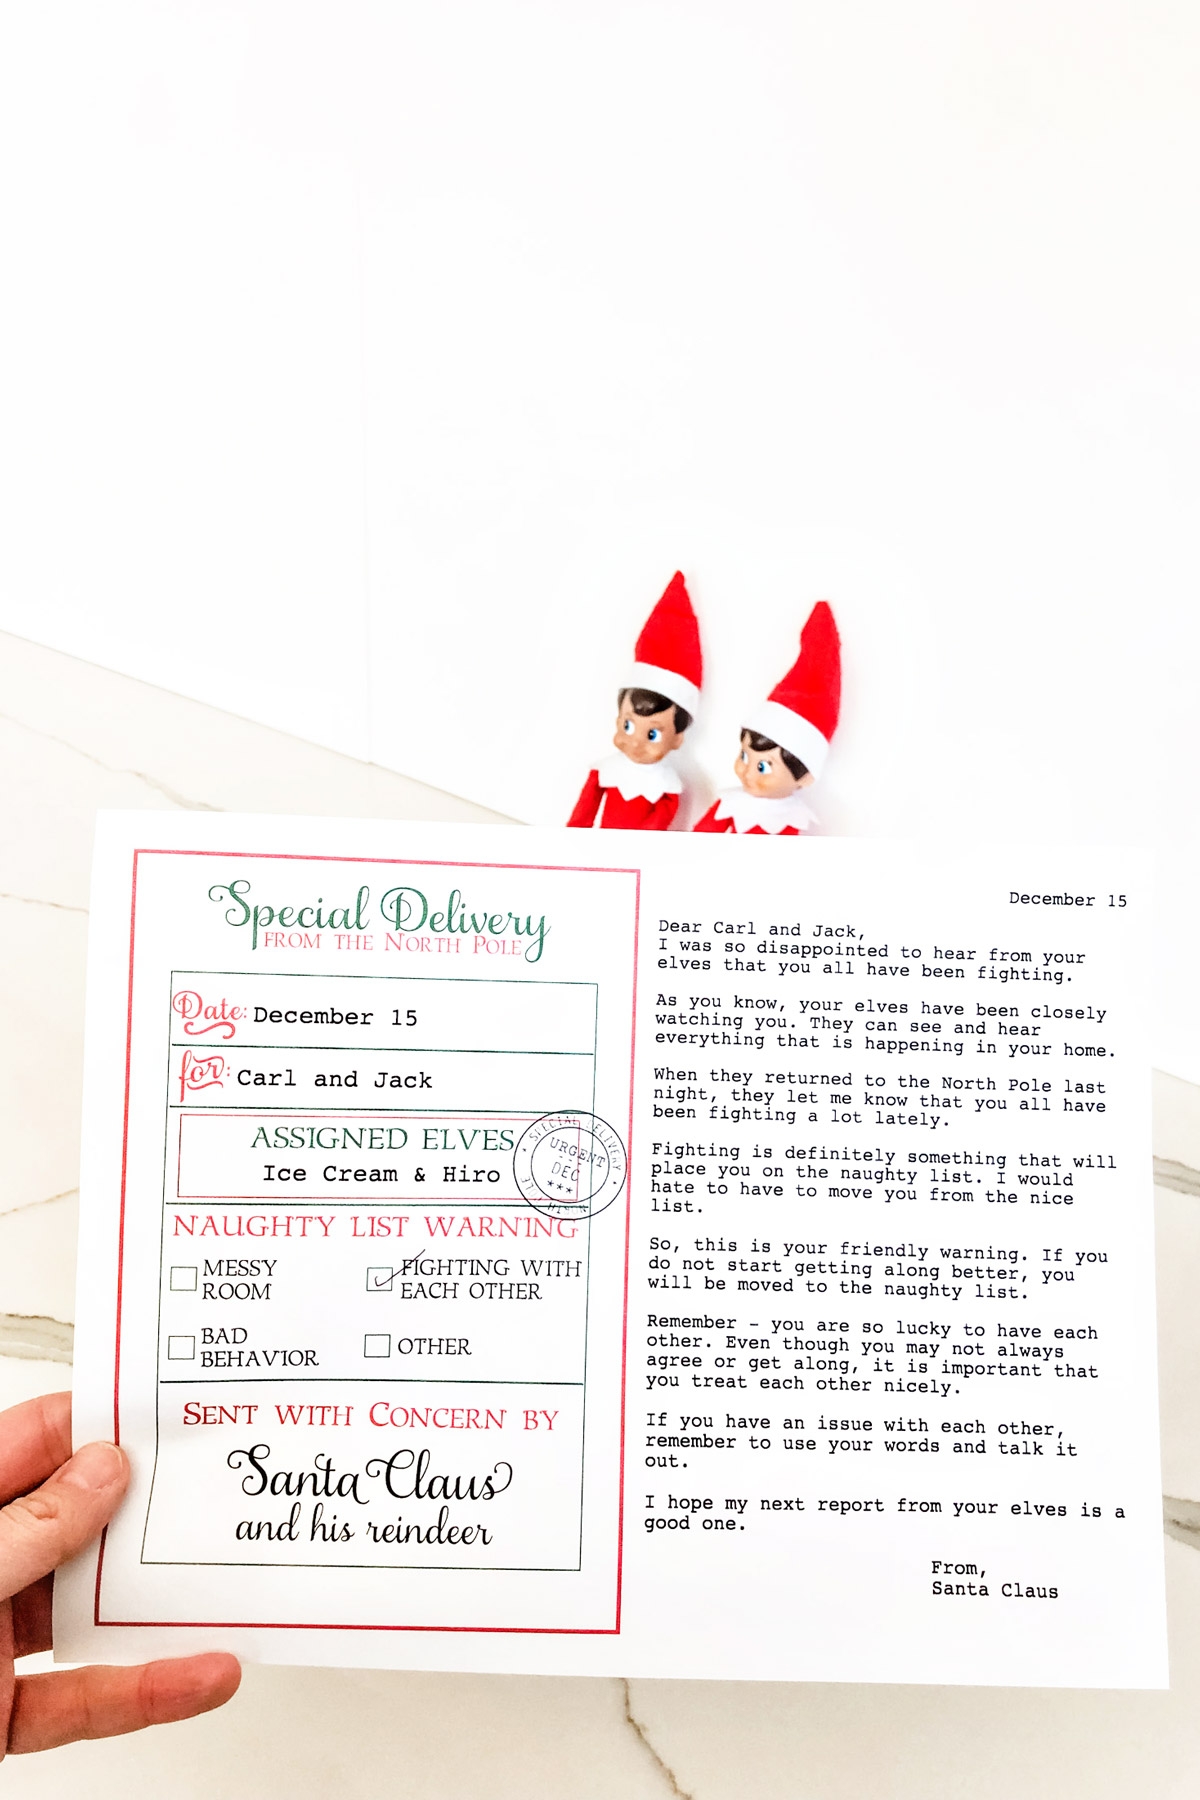 Elf Warning Letter Free Printable